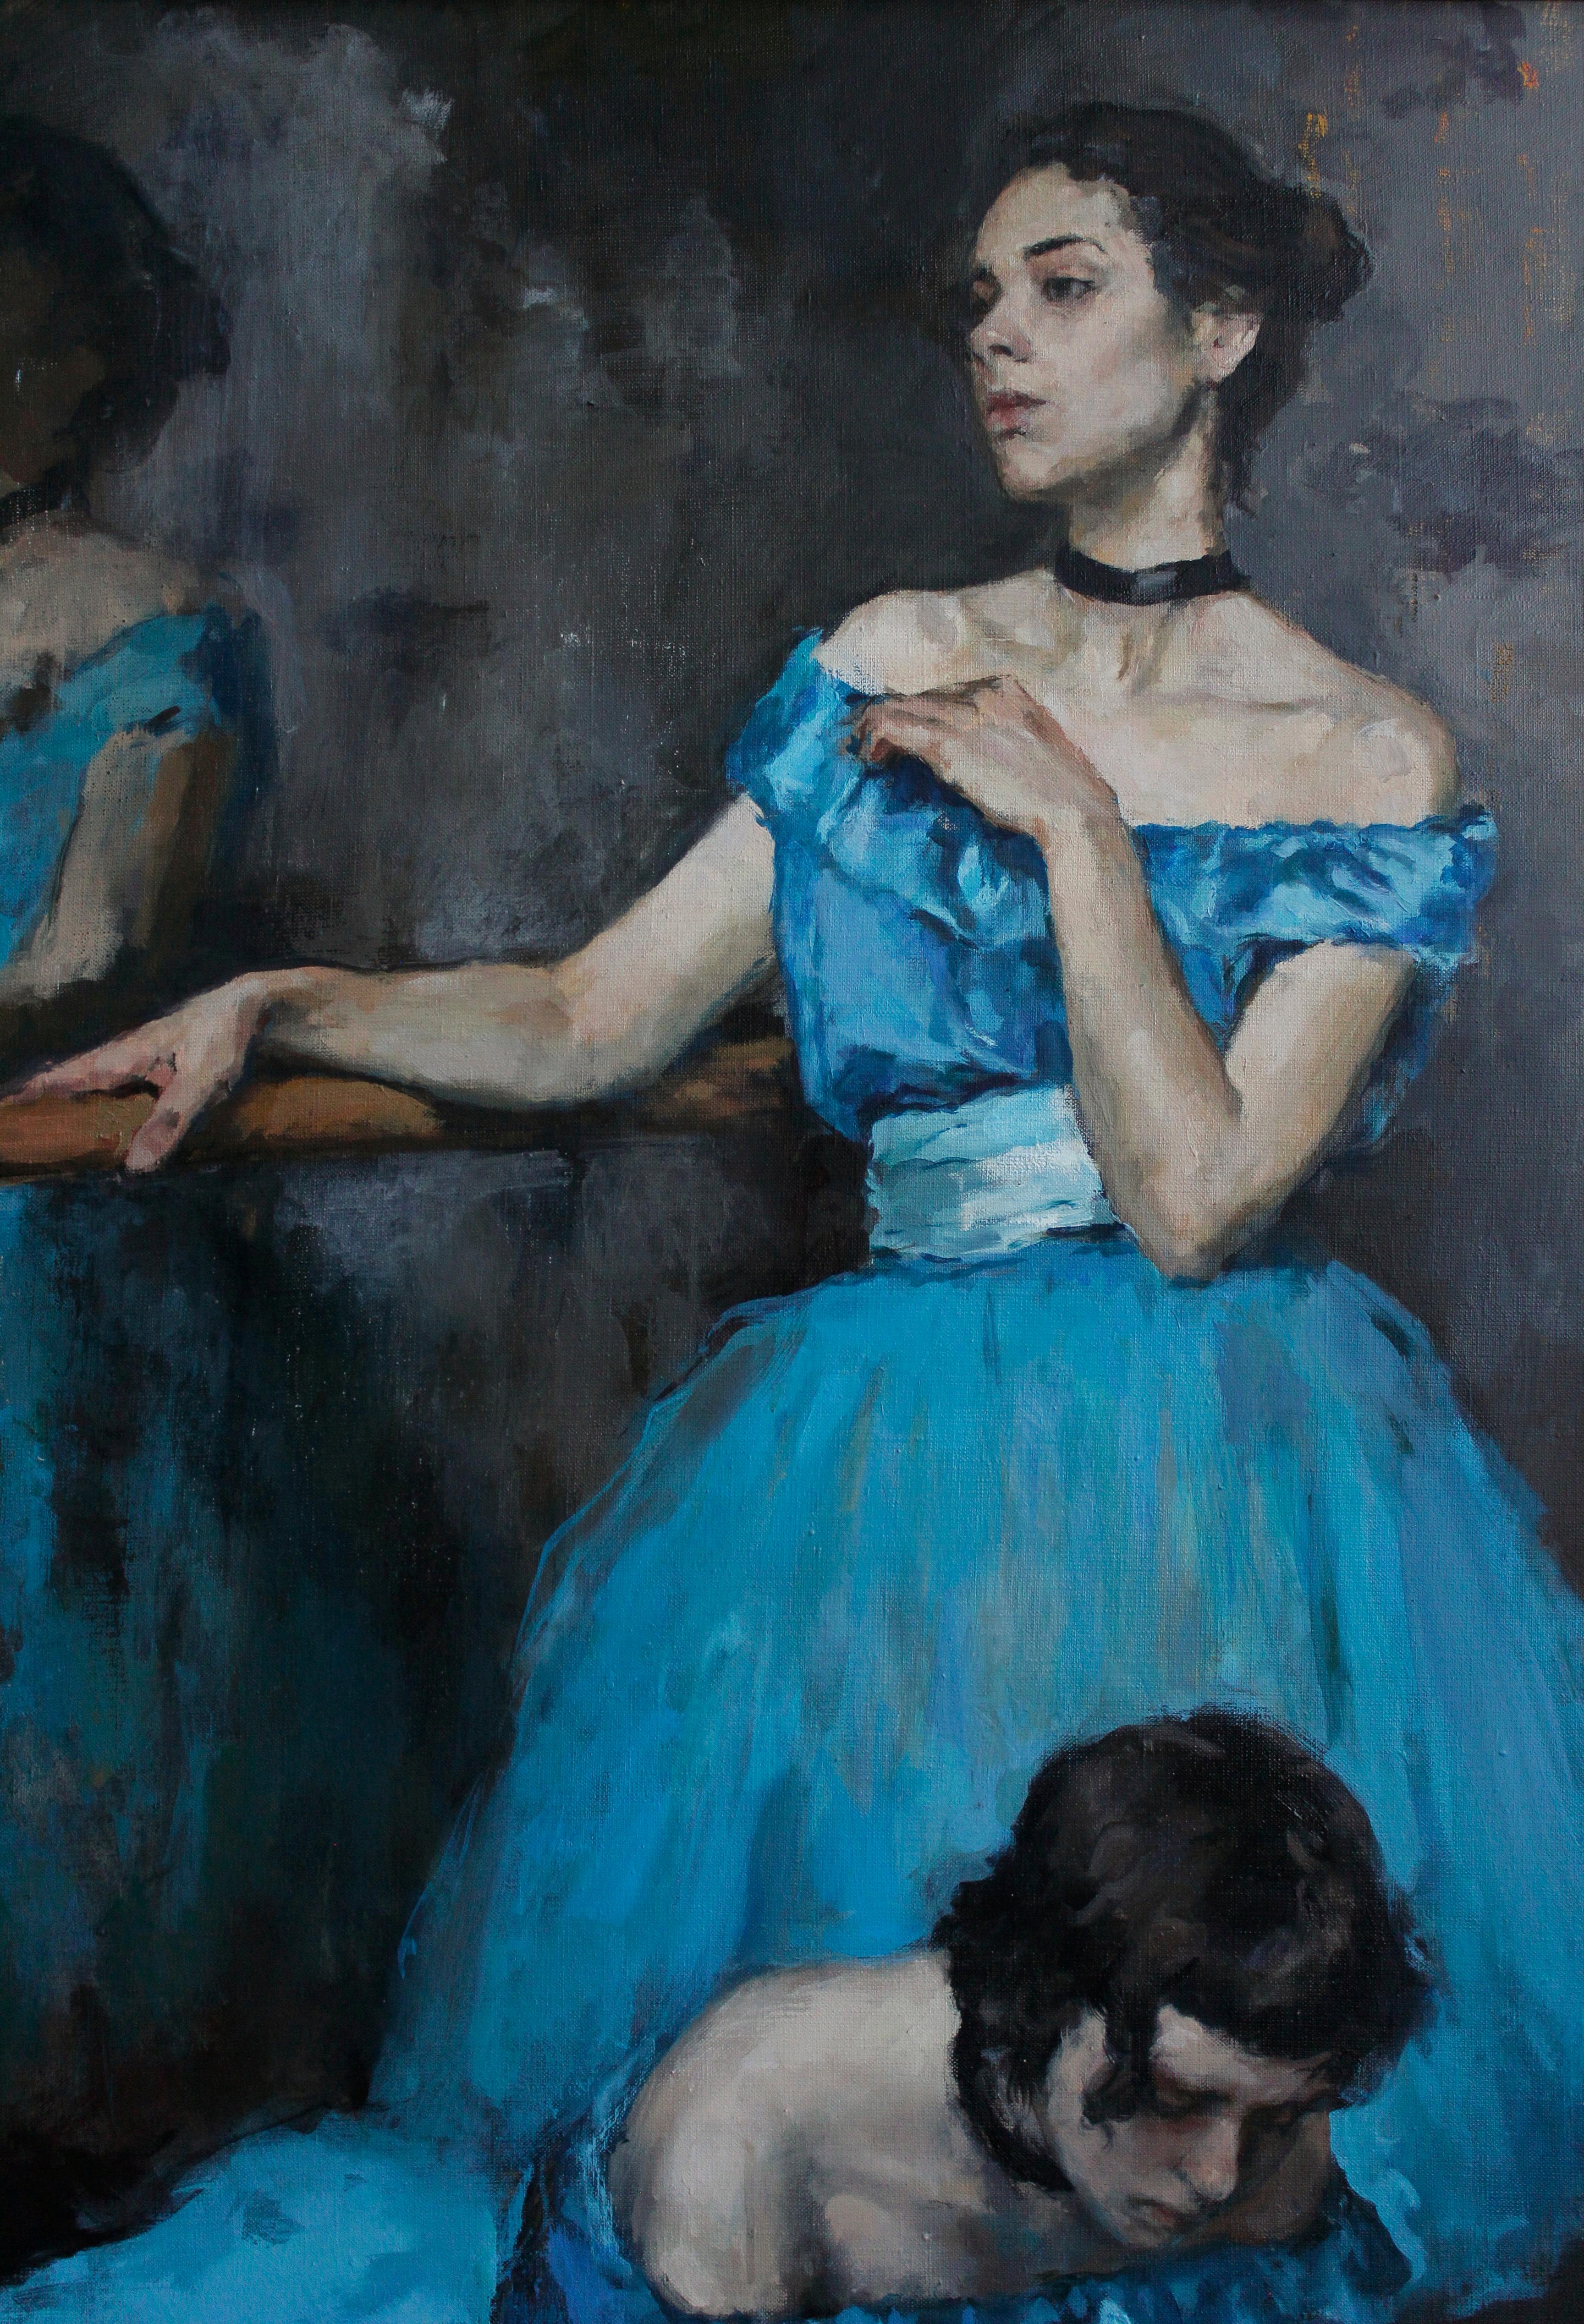 Ballerinas in Blue Tutus - 21st Century Contemporary Realism Oil Painting 2